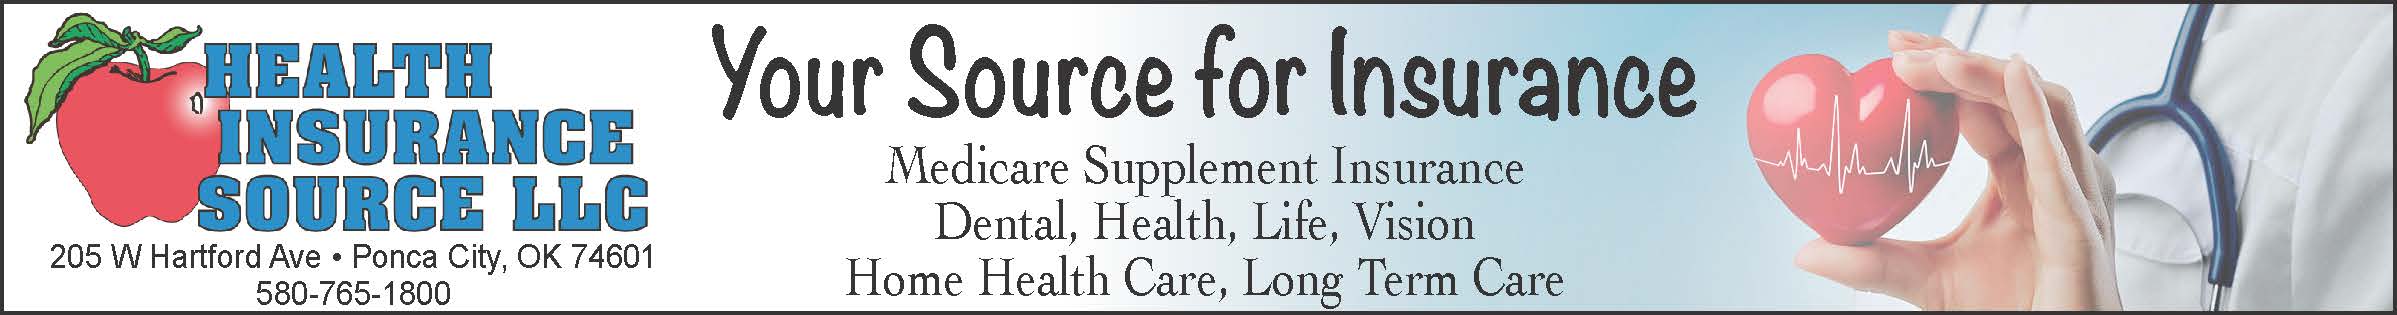 Health Insurance Source